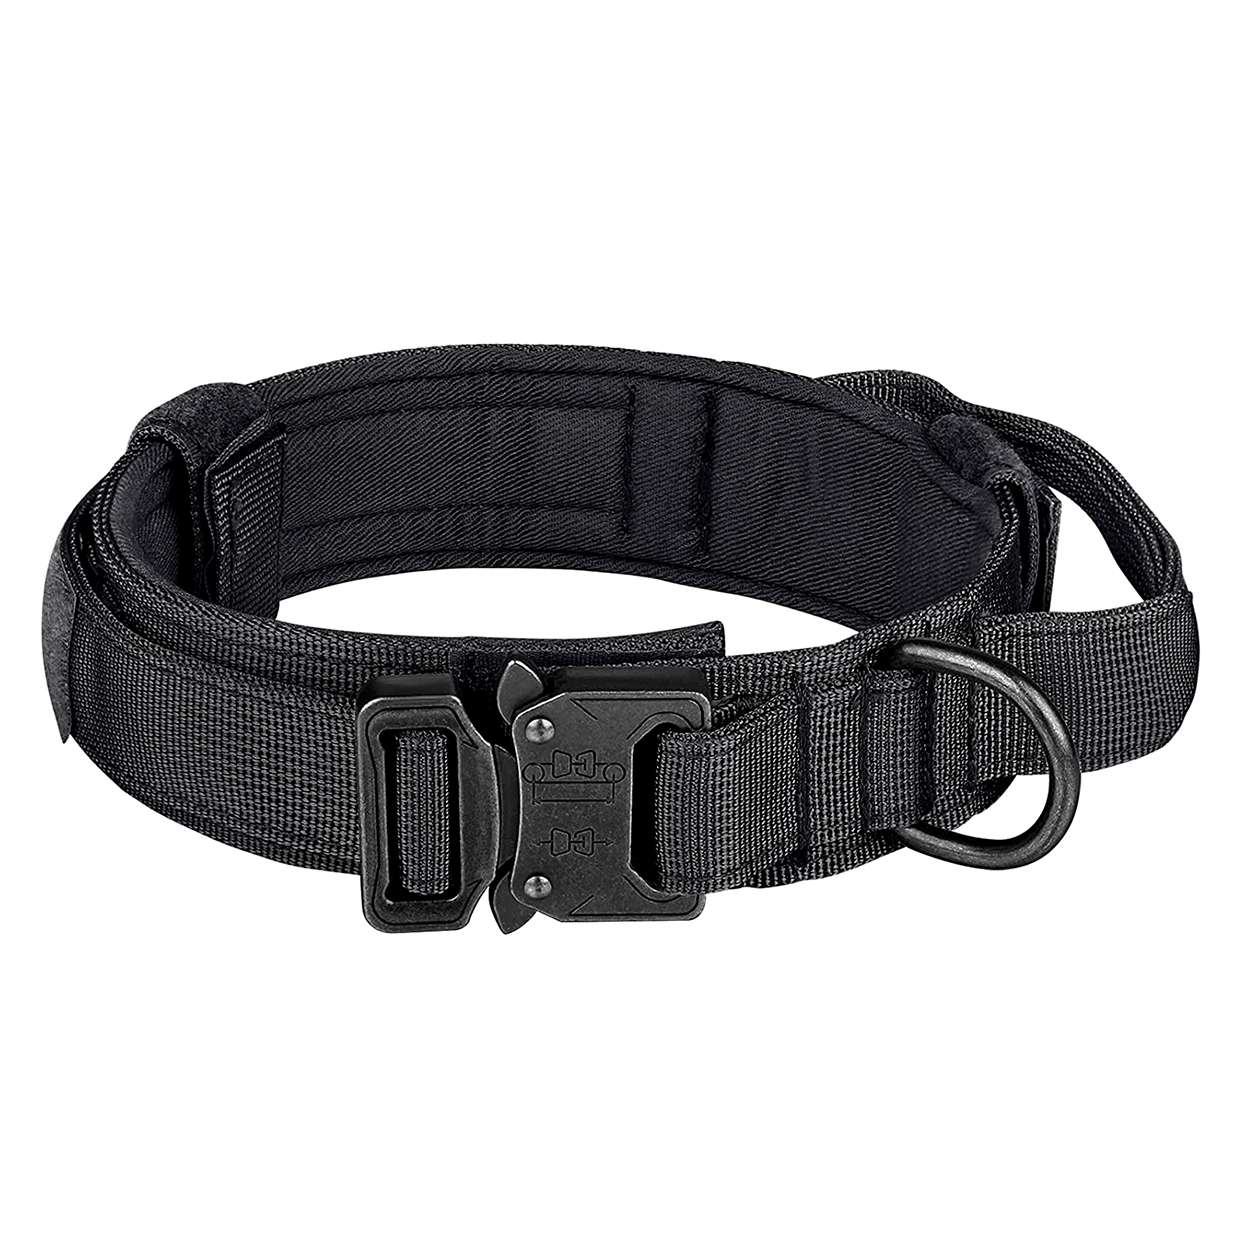 Daganxi Tactical Dog Collar black